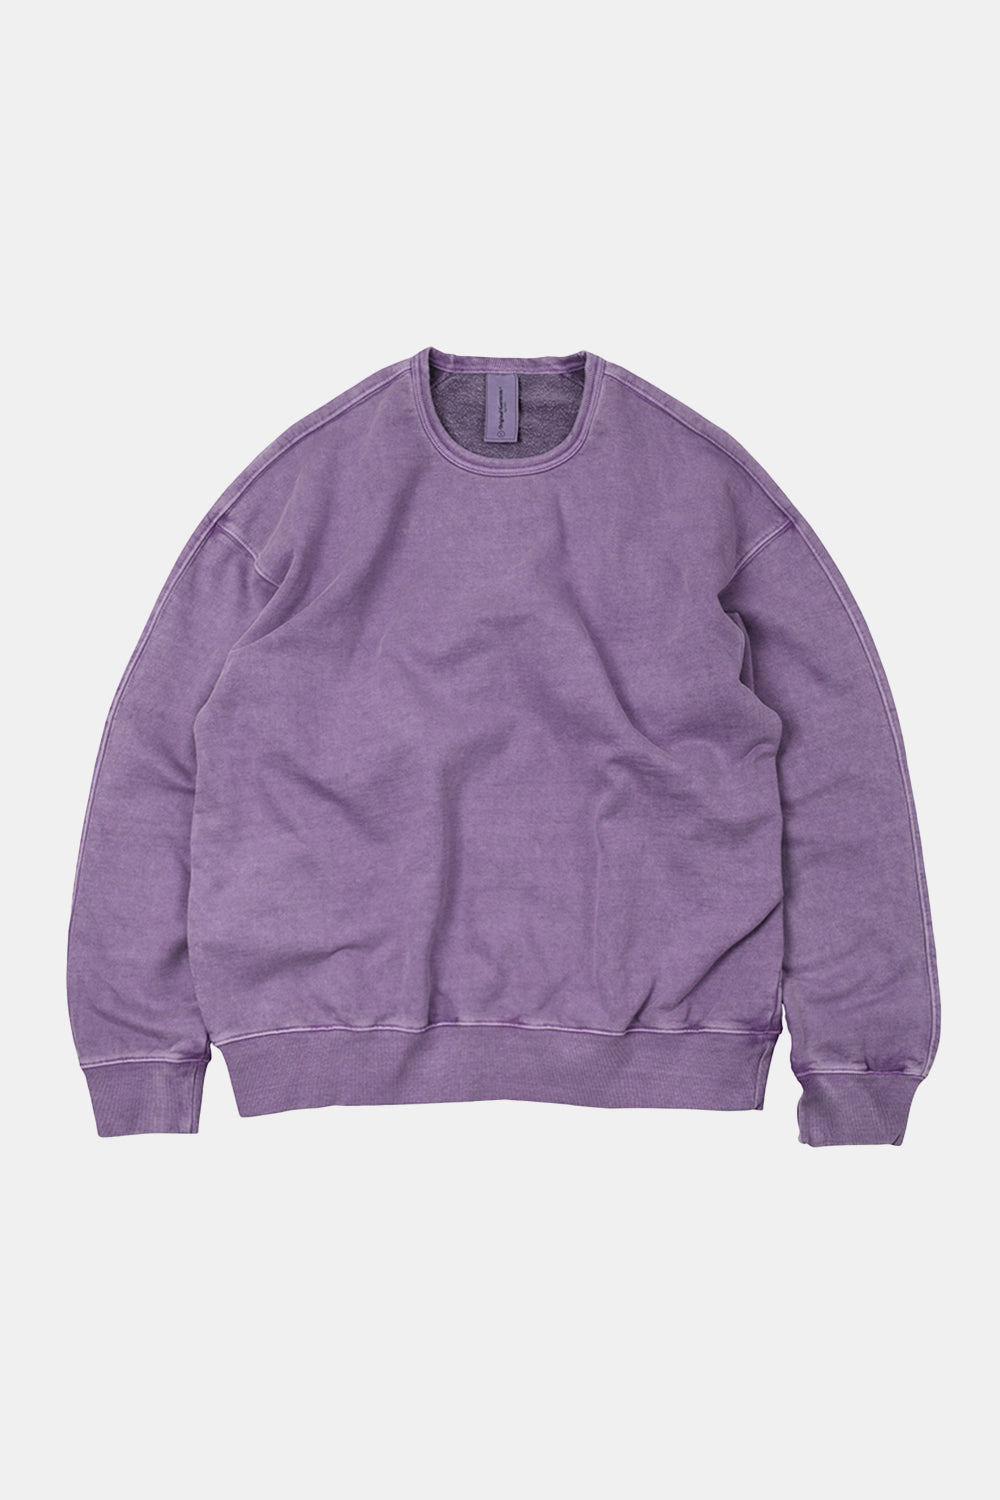 Frizmworks OG Pigment Dyeing Sweatshirt (Purple)